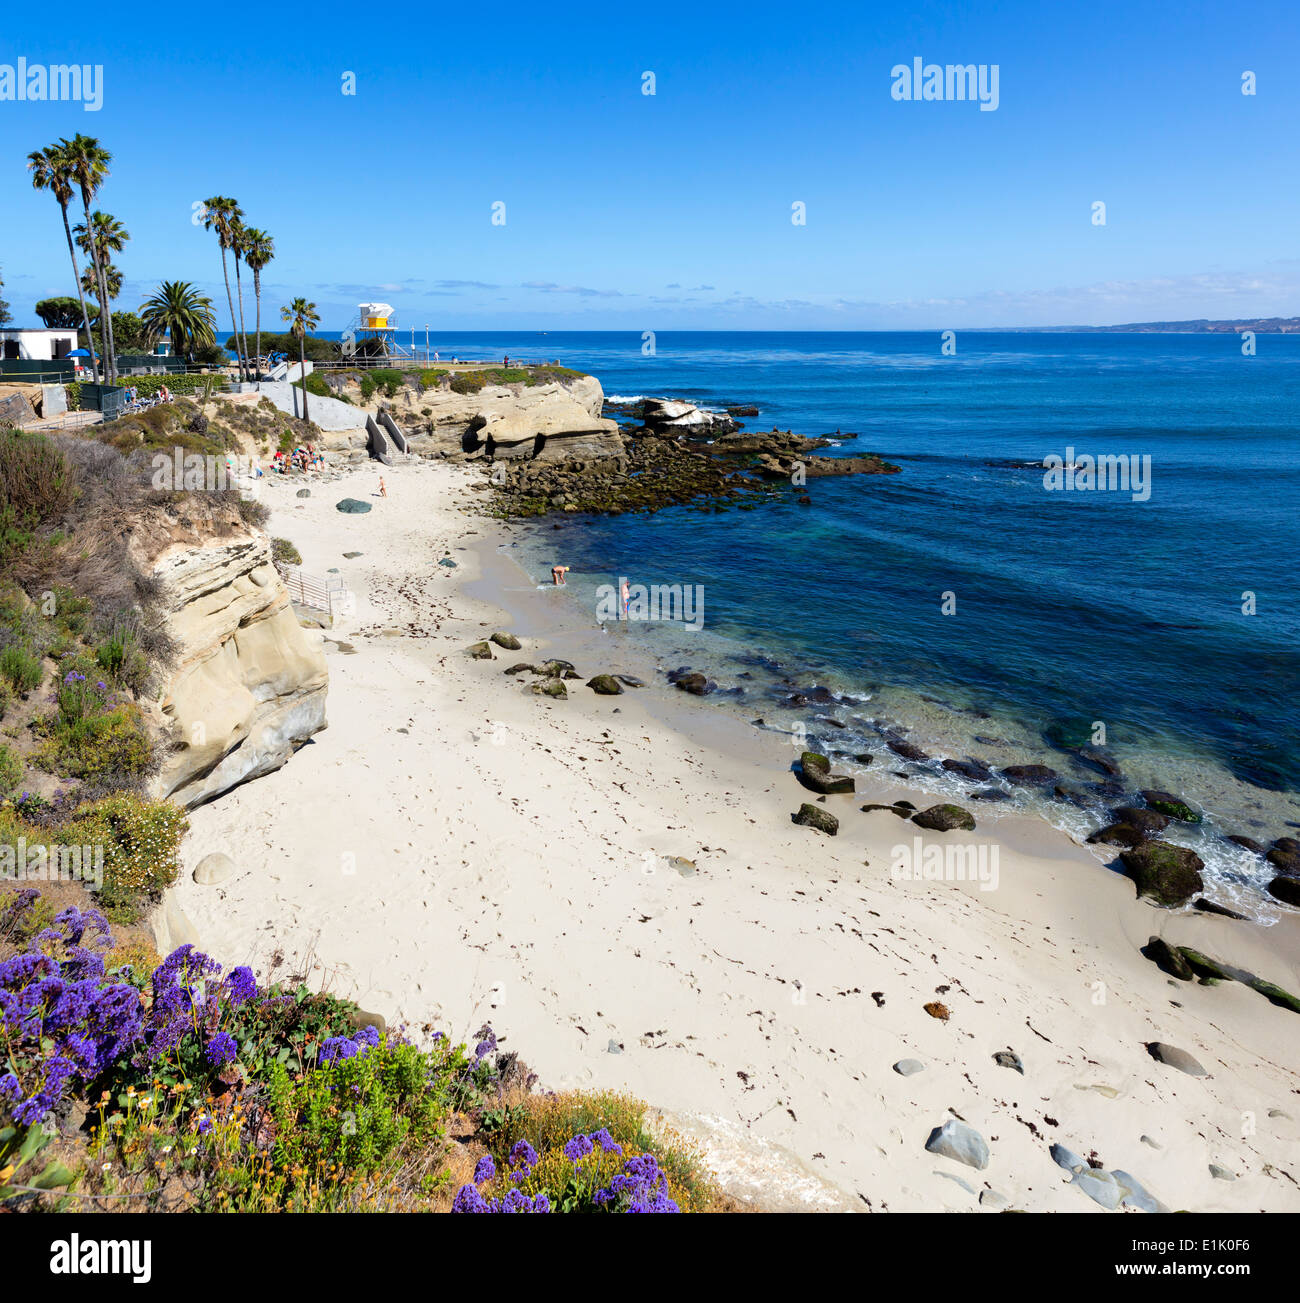 La plage de La Jolla Cove, La Jolla, San Diego County, Californie, USA Banque D'Images